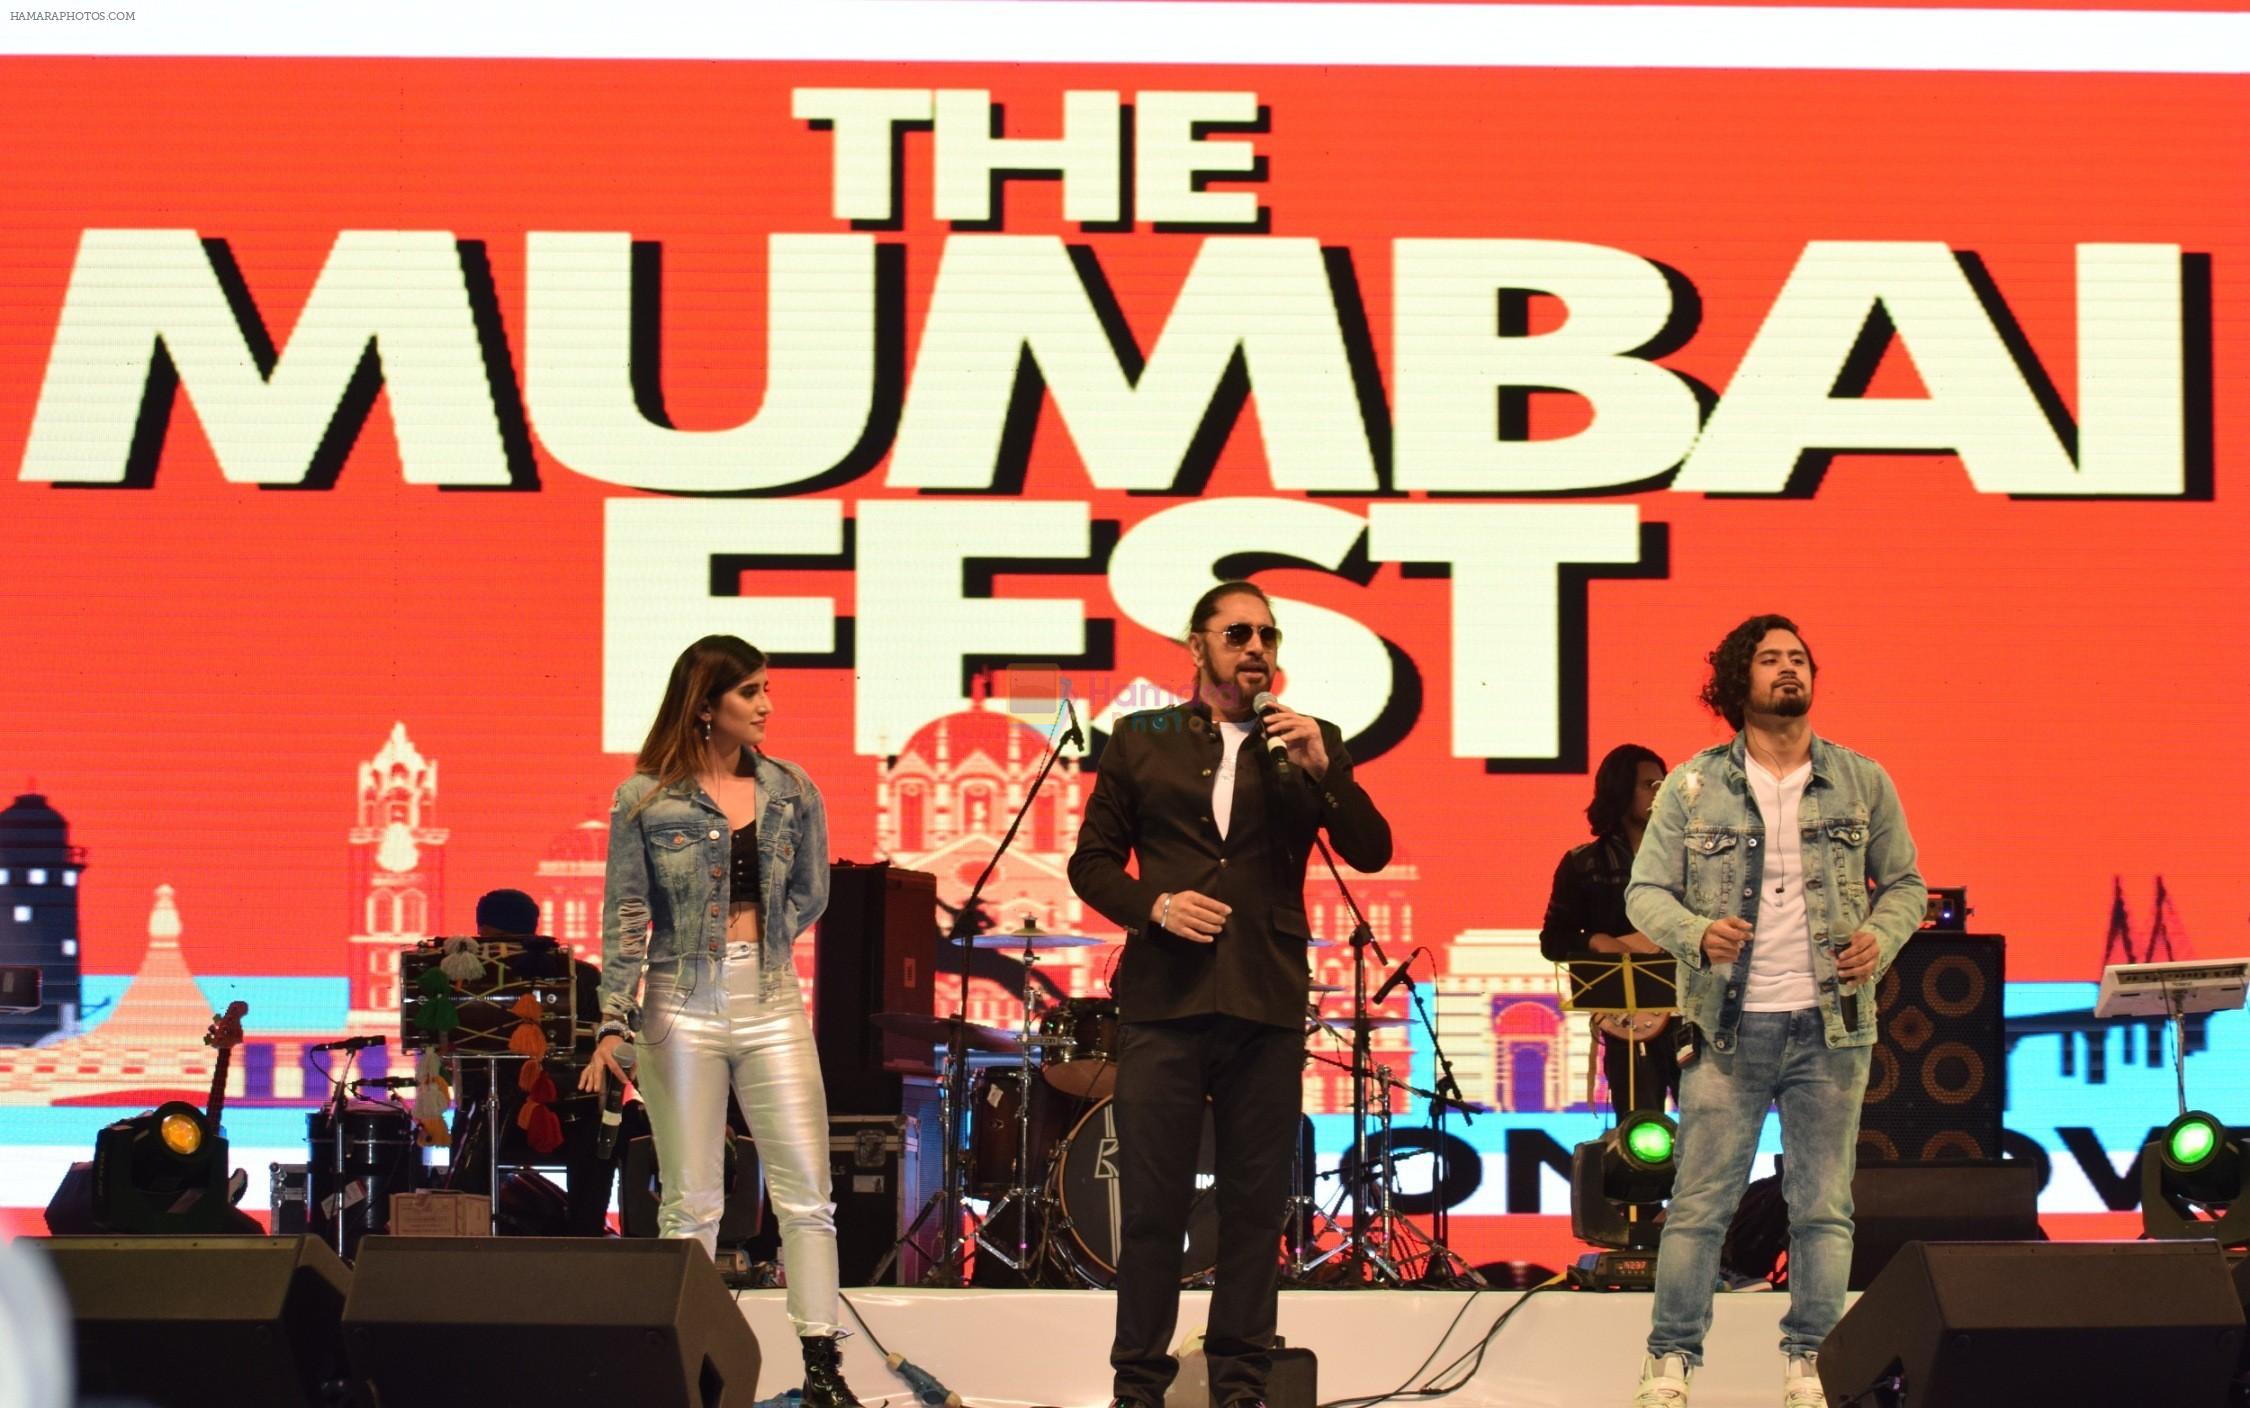 Arvinder Singh performing during The Mumbai Fest 2018 on 27th Jan 2018